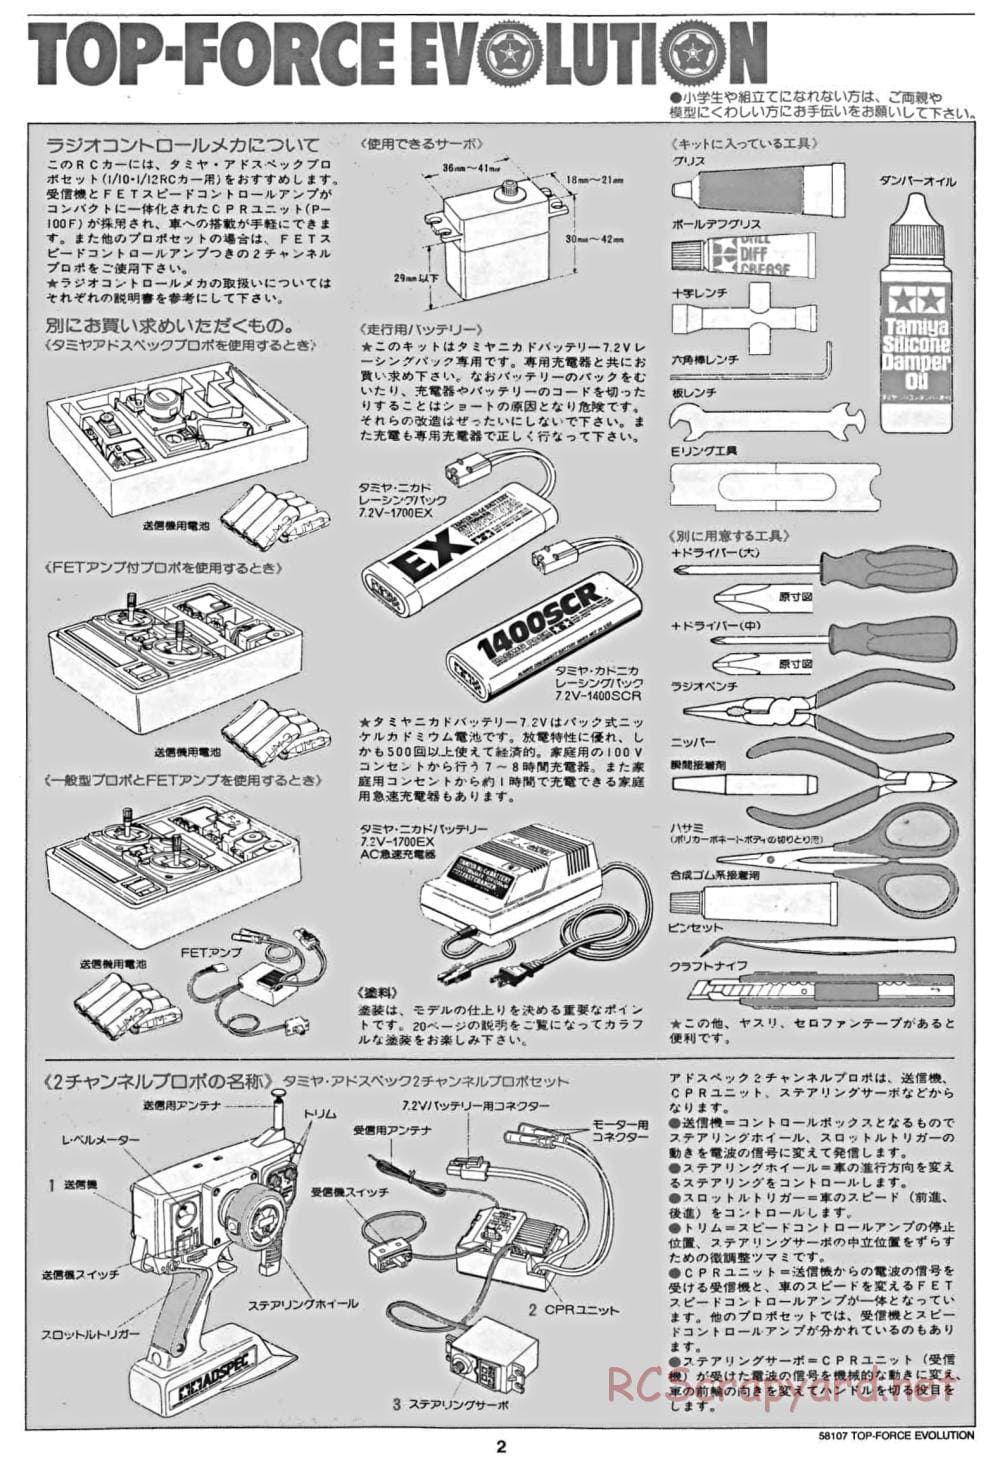 Tamiya - Top Force Evolution Chassis - Manual - Page 2